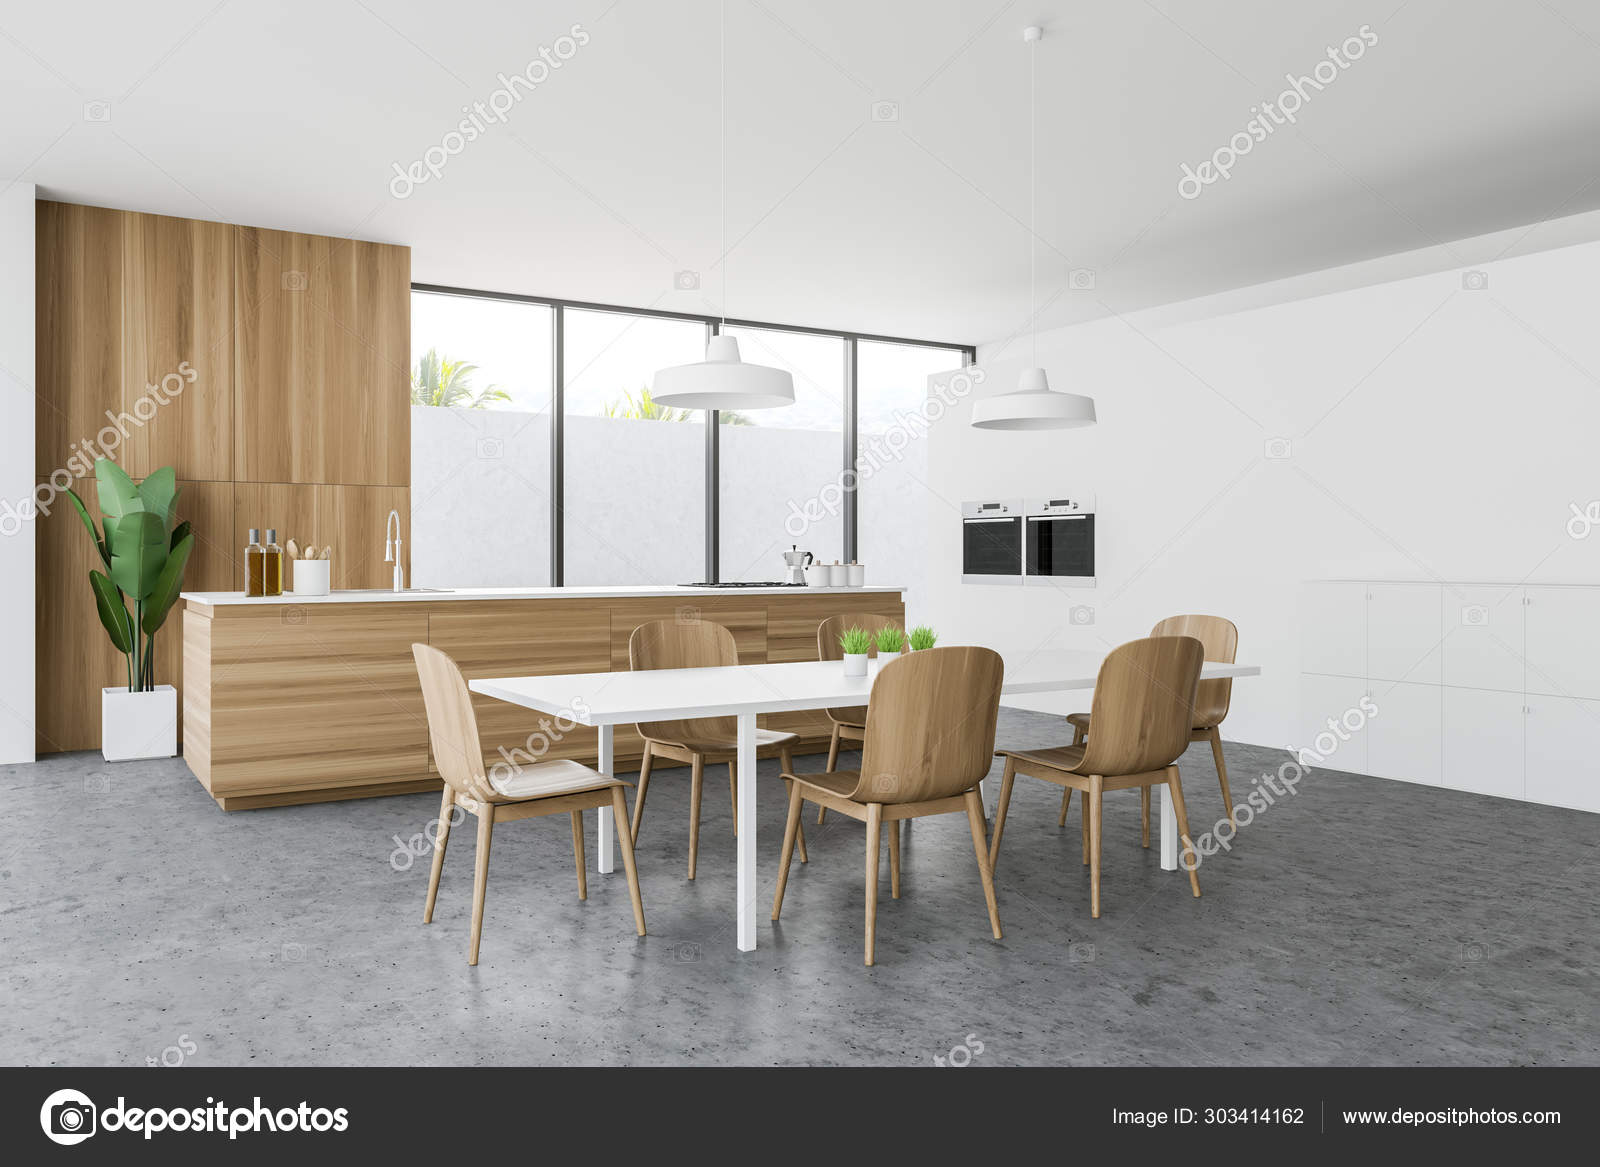 White Kitchen Corner Countertop And Table Stock Photo